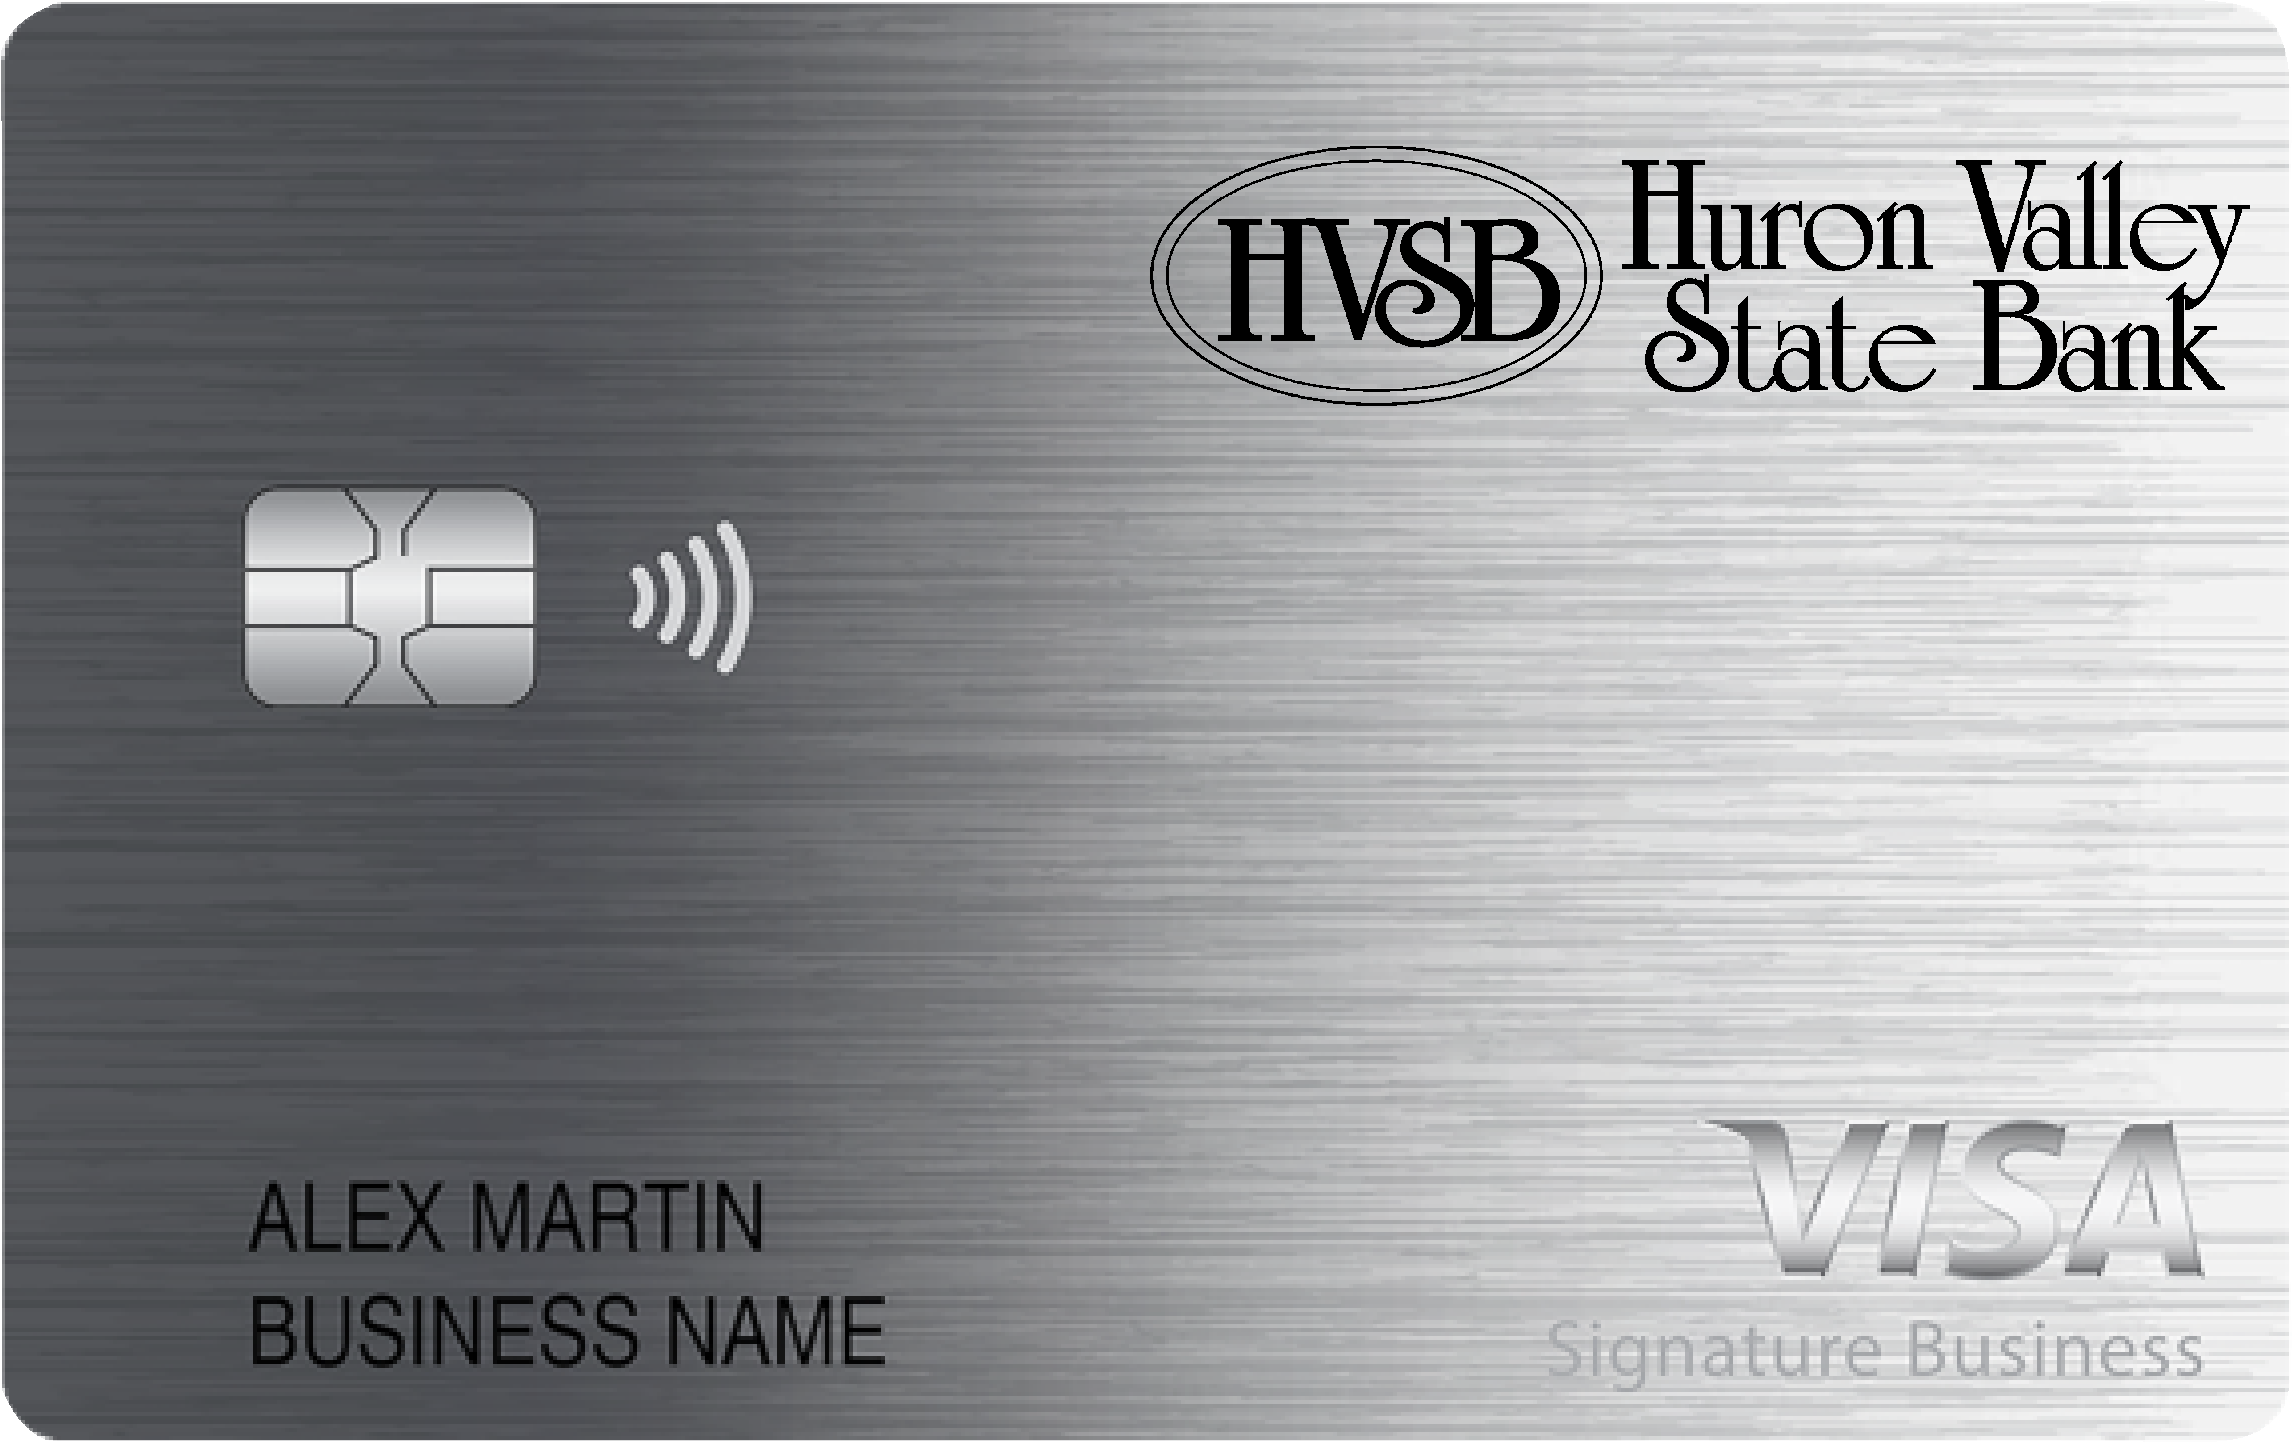 Huron Valley State Bank Smart Business Rewards Card